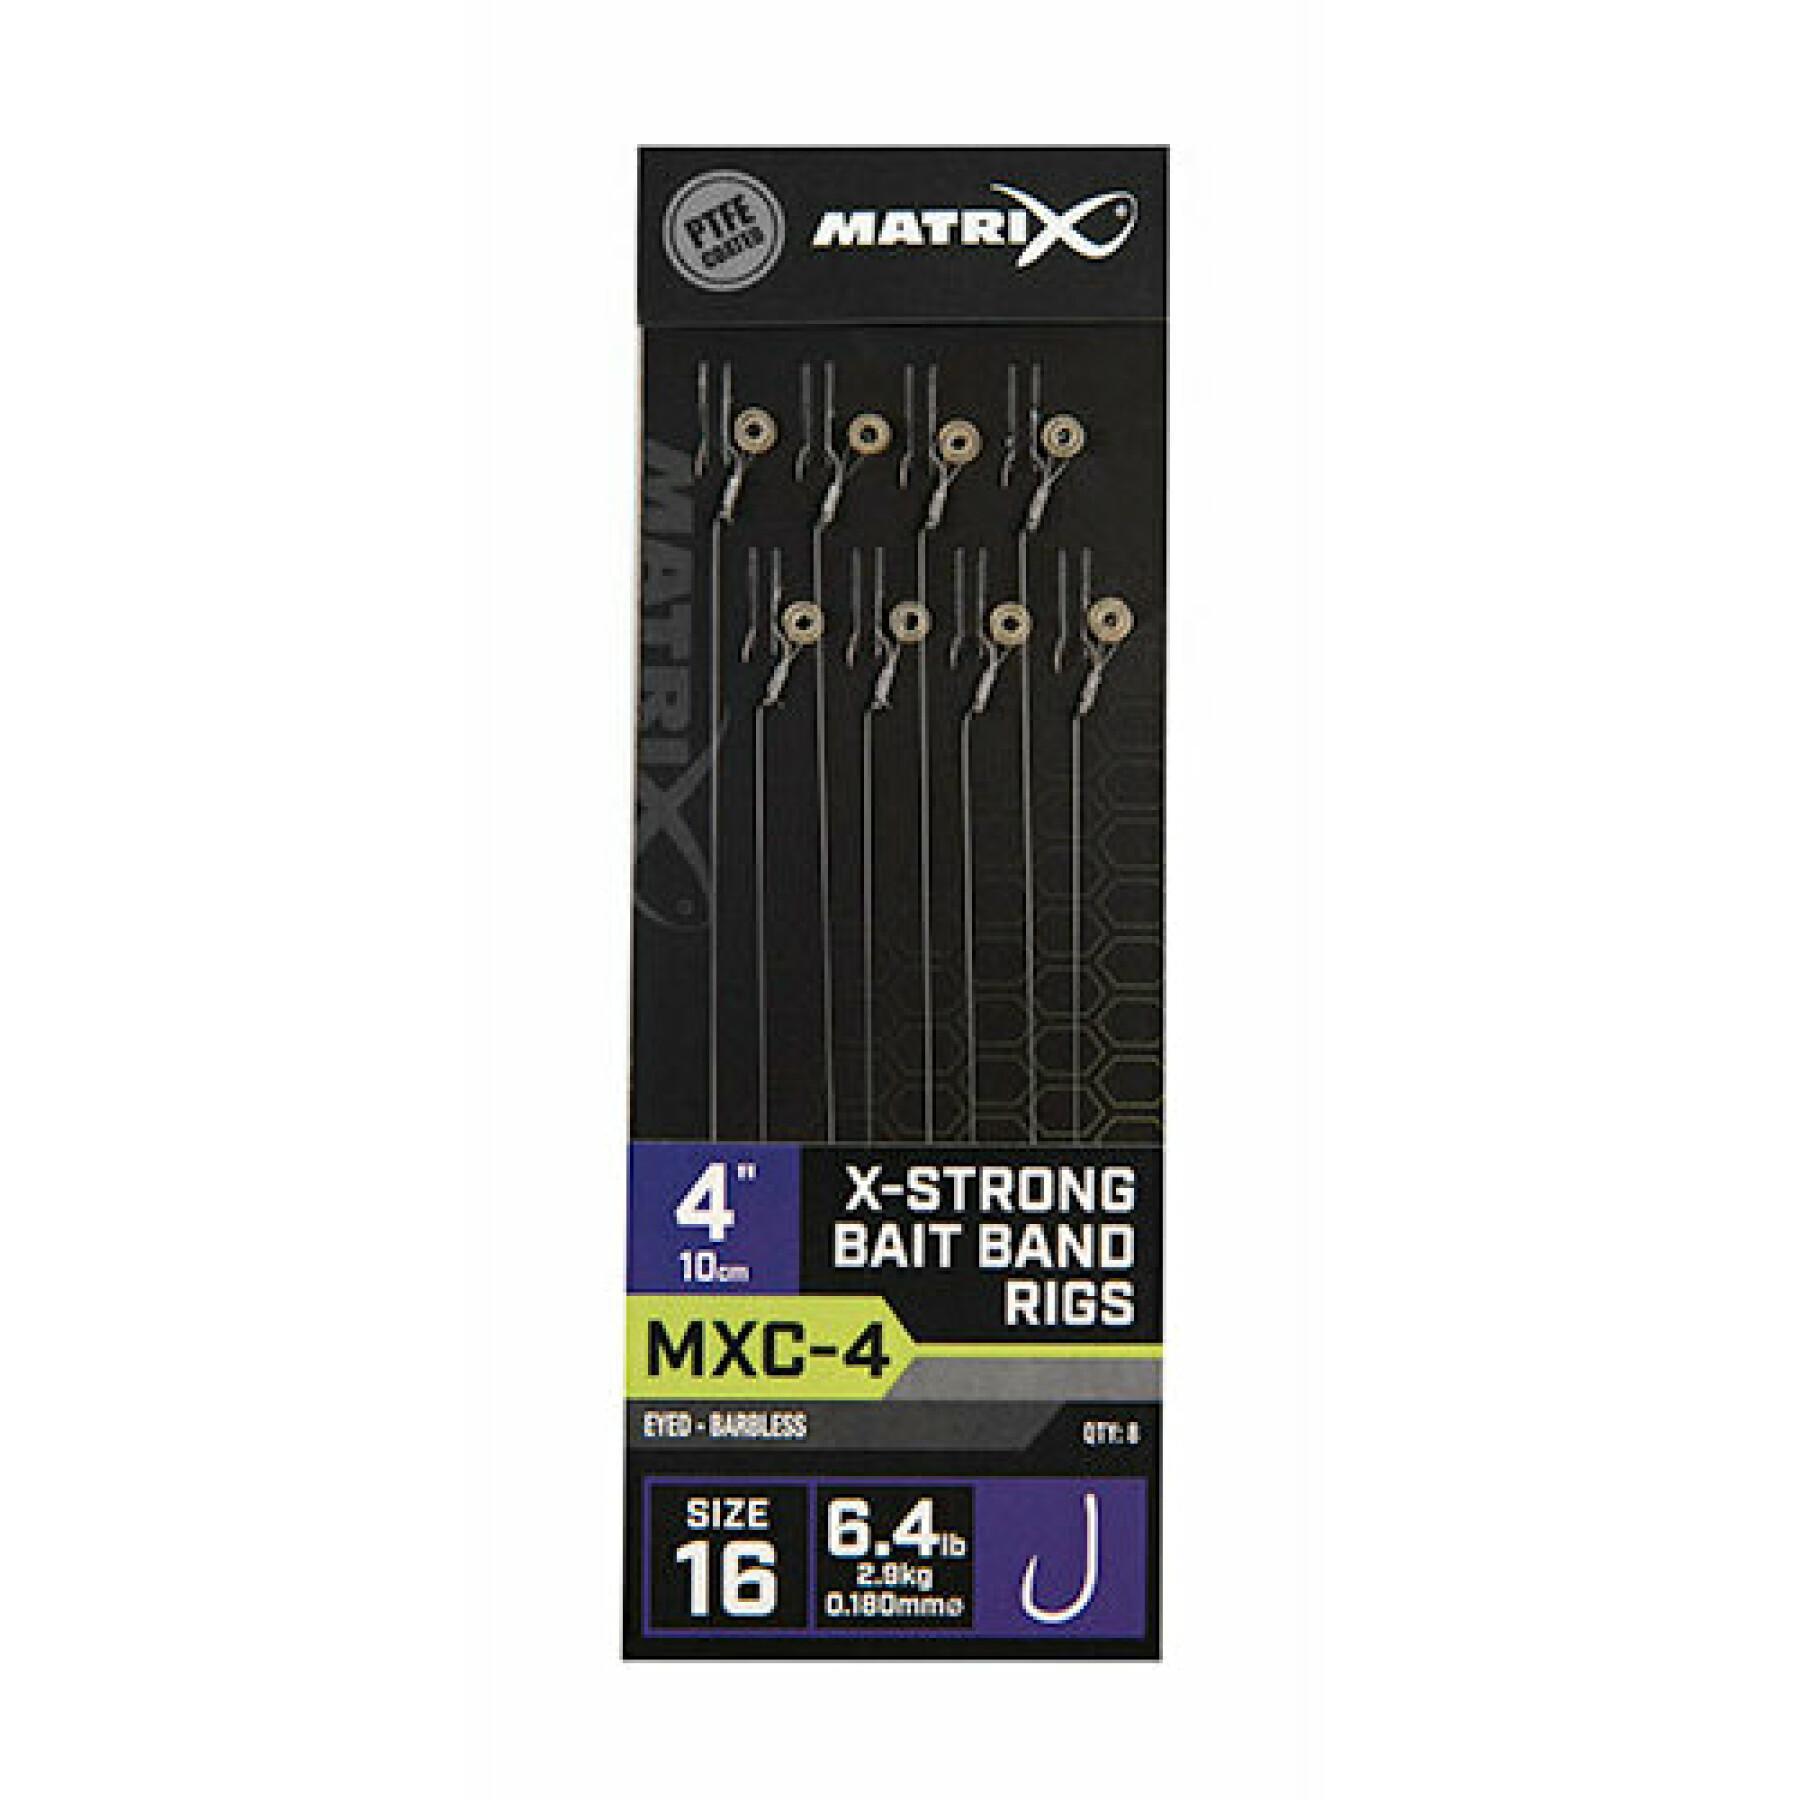 Líder sin barra Matrix MXC-4 X-strong Bait Band 10cm x8